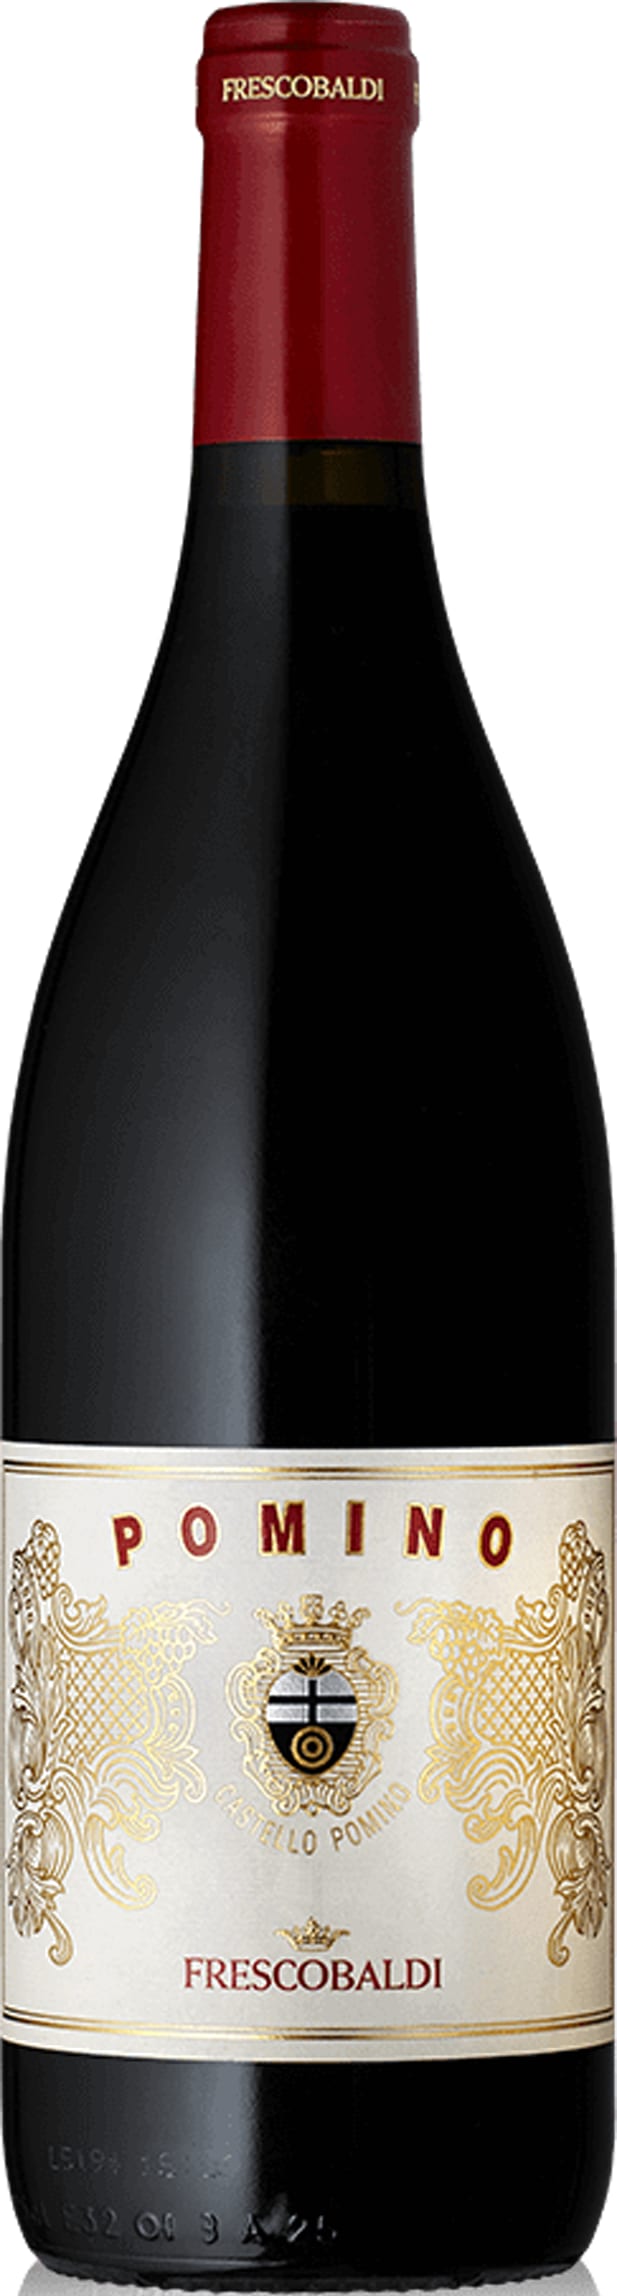 Frescobaldi Pomino Pinot Nero 2020 75cl - Buy Frescobaldi Wines from GREAT WINES DIRECT wine shop